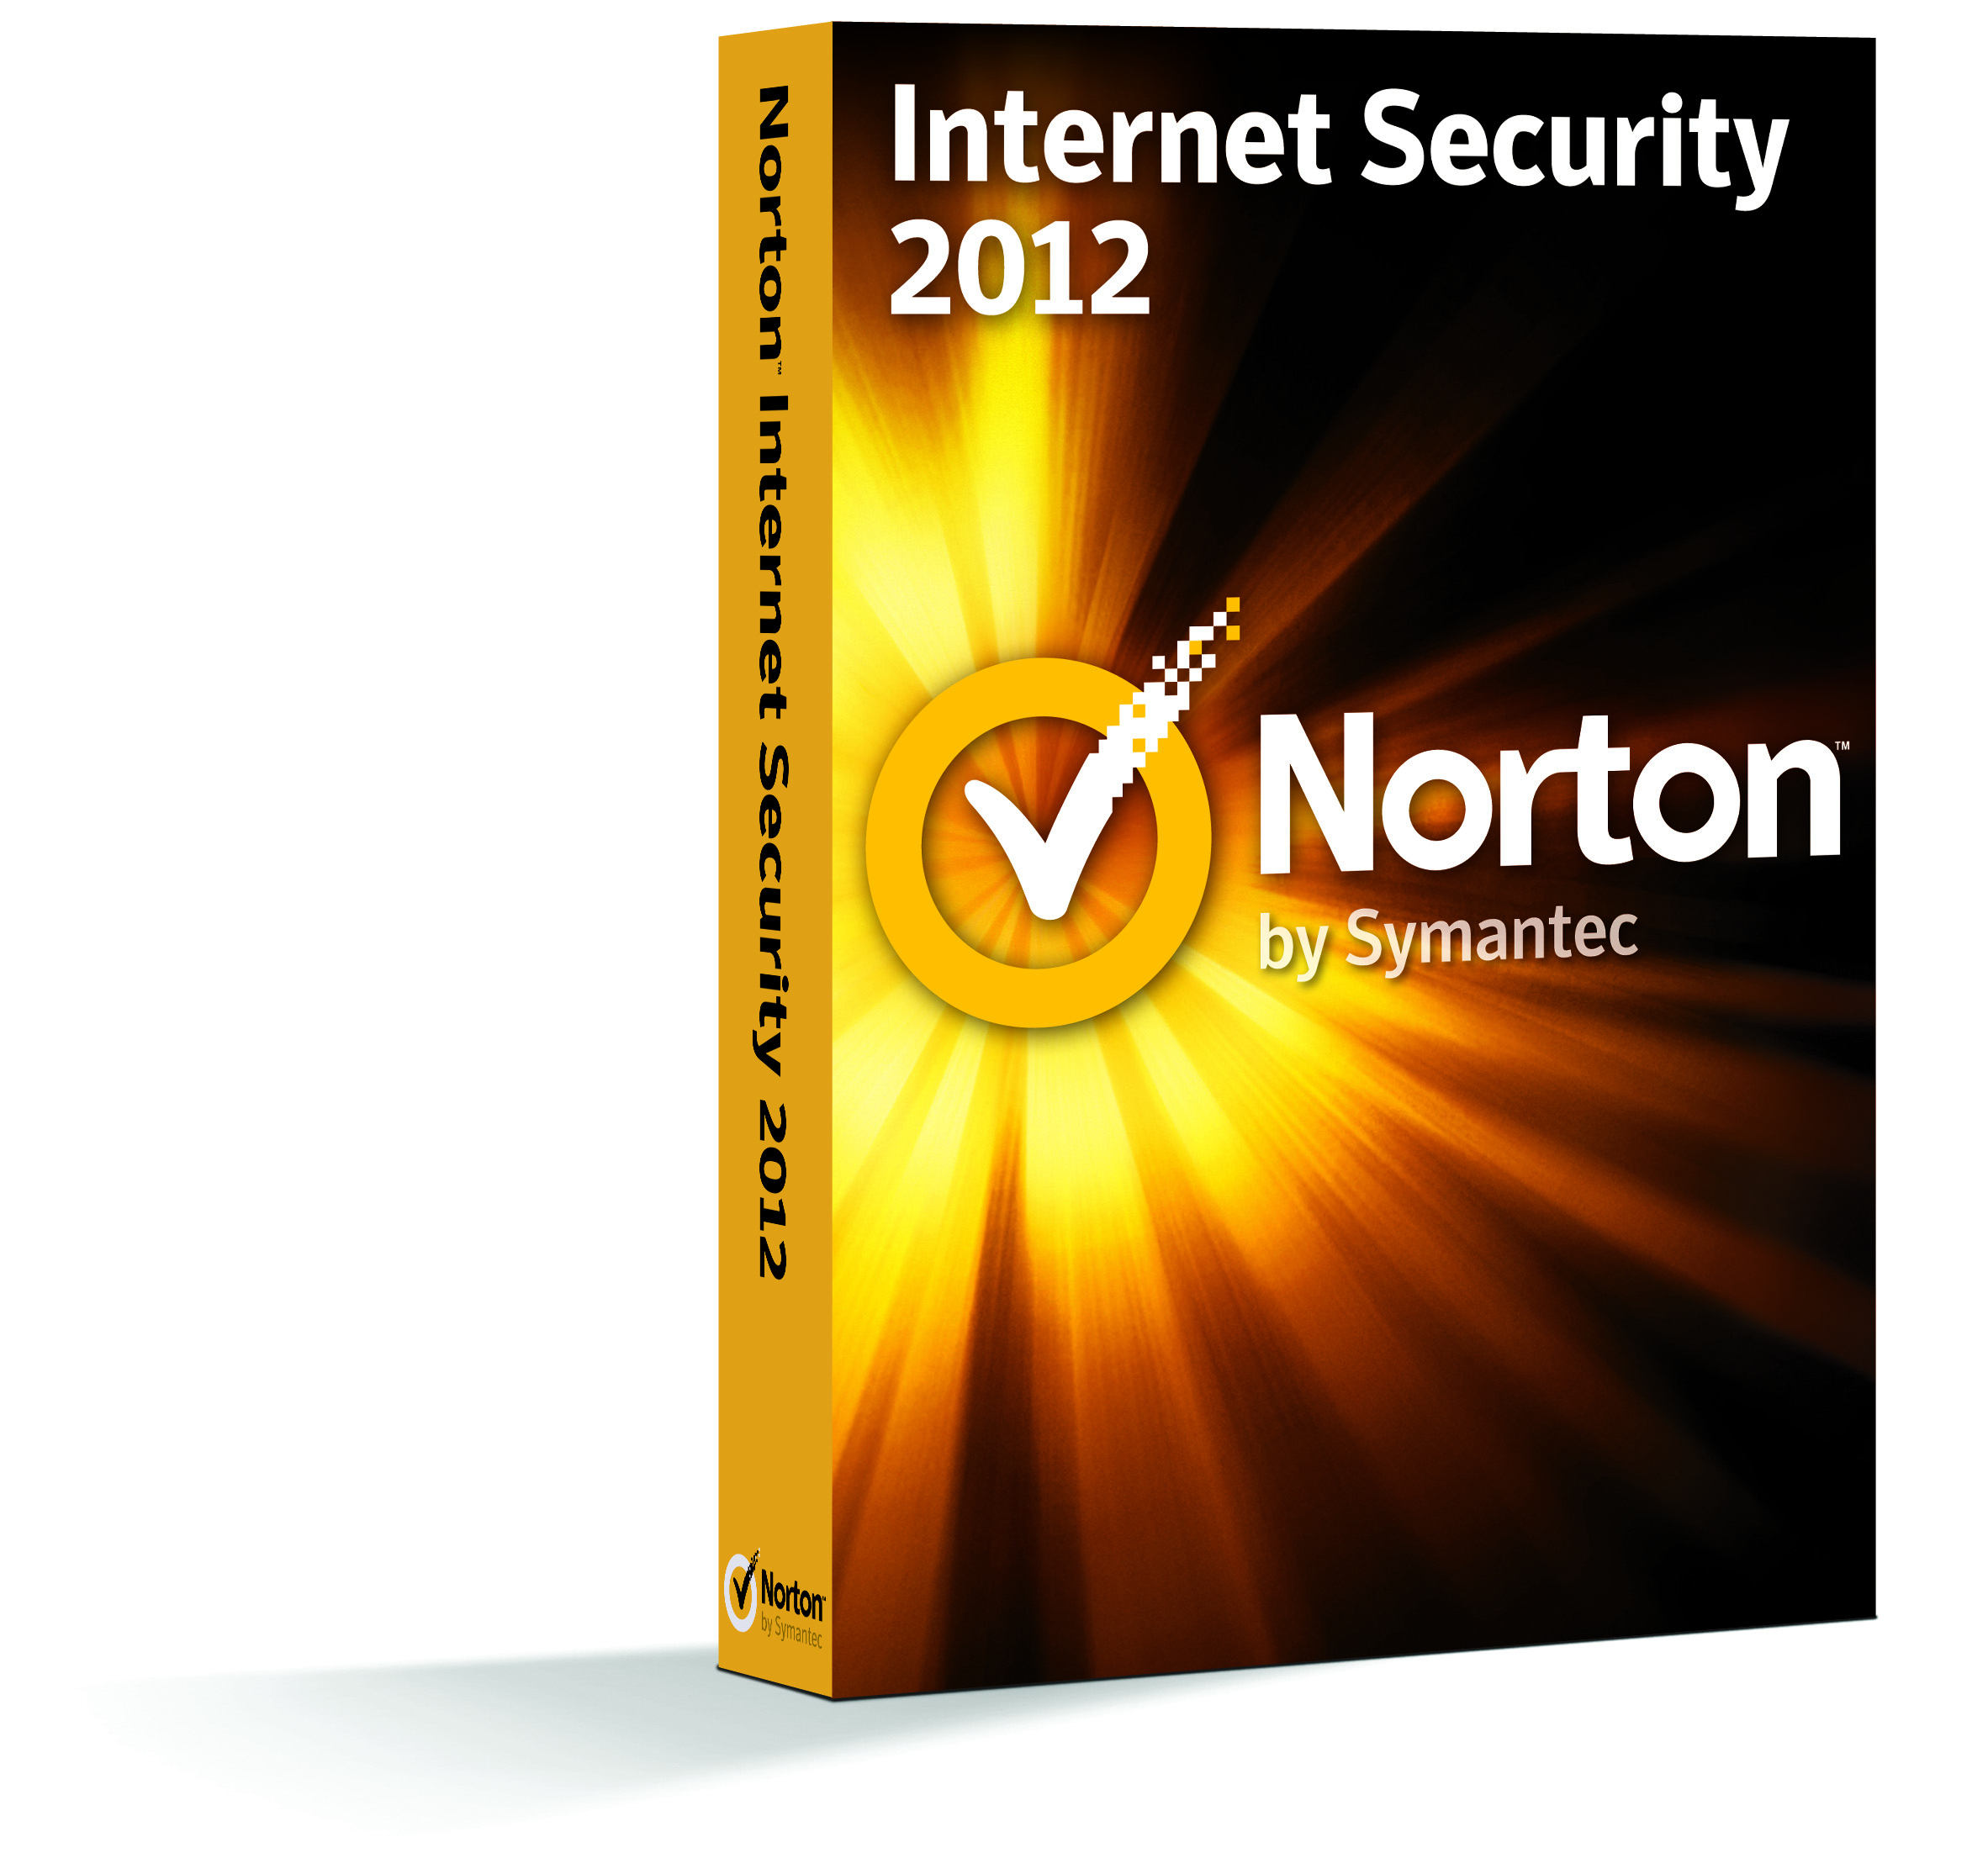 Symantec ™ Internet Security 2012